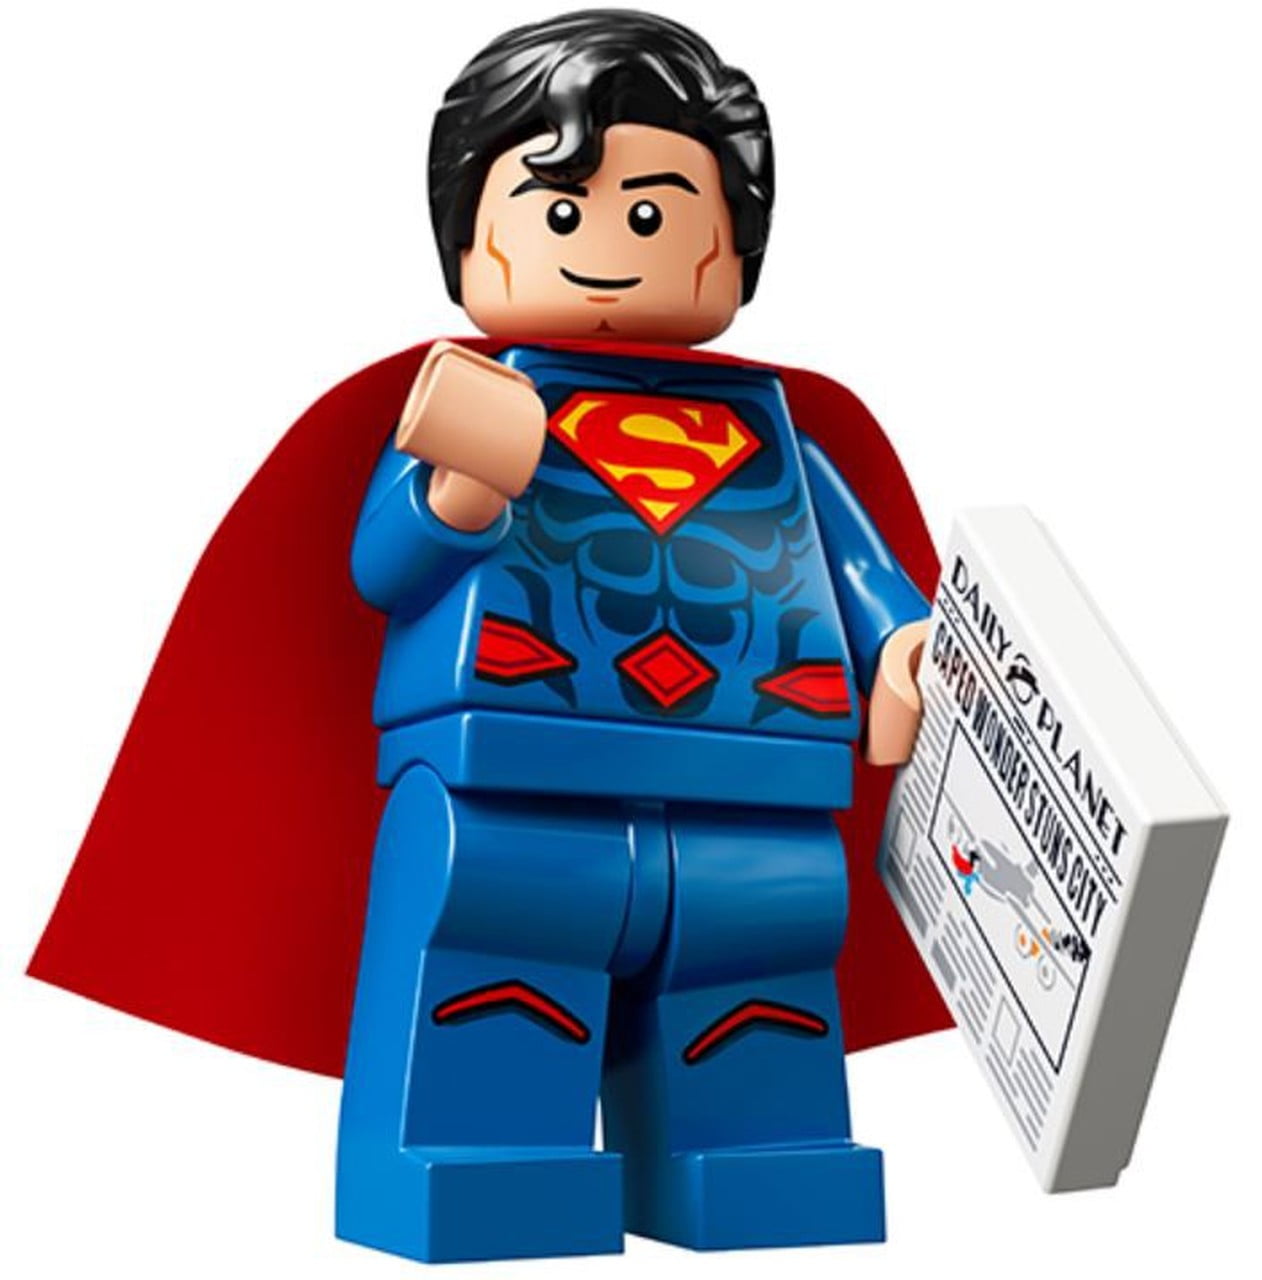 LEGO CMF MINIFIGURES DC SUPERHEROES SERIES Genuine minifig Green Lantern